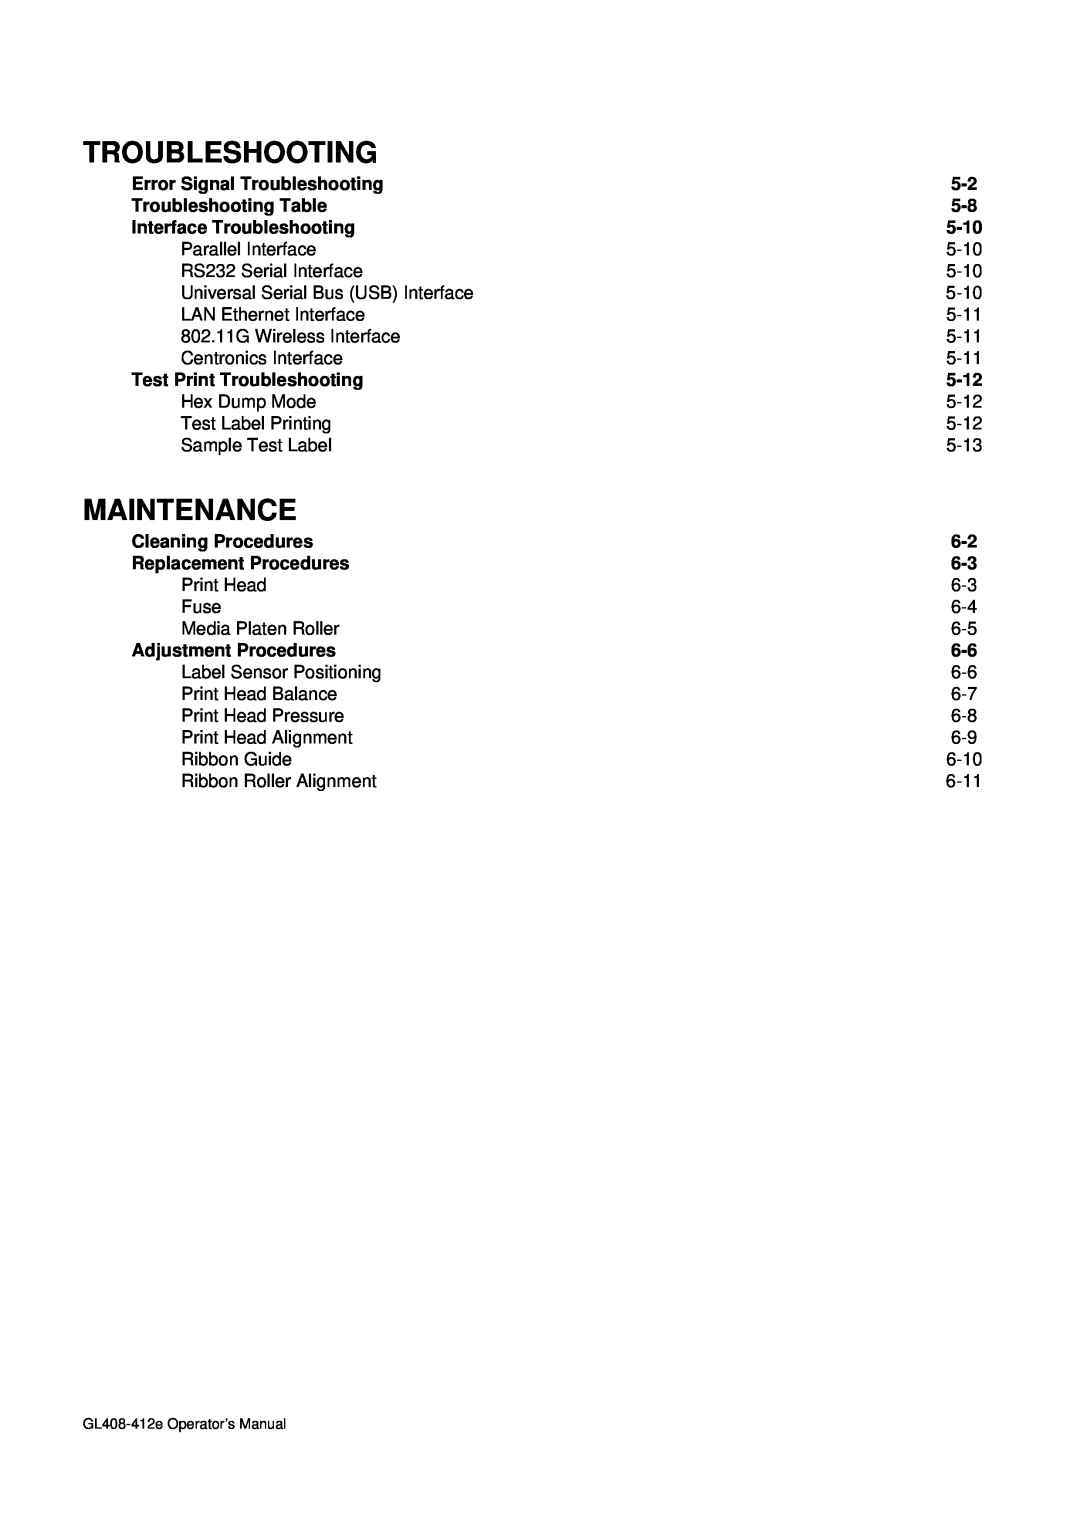 SATO GL4XXE manual Troubleshooting, Maintenance 